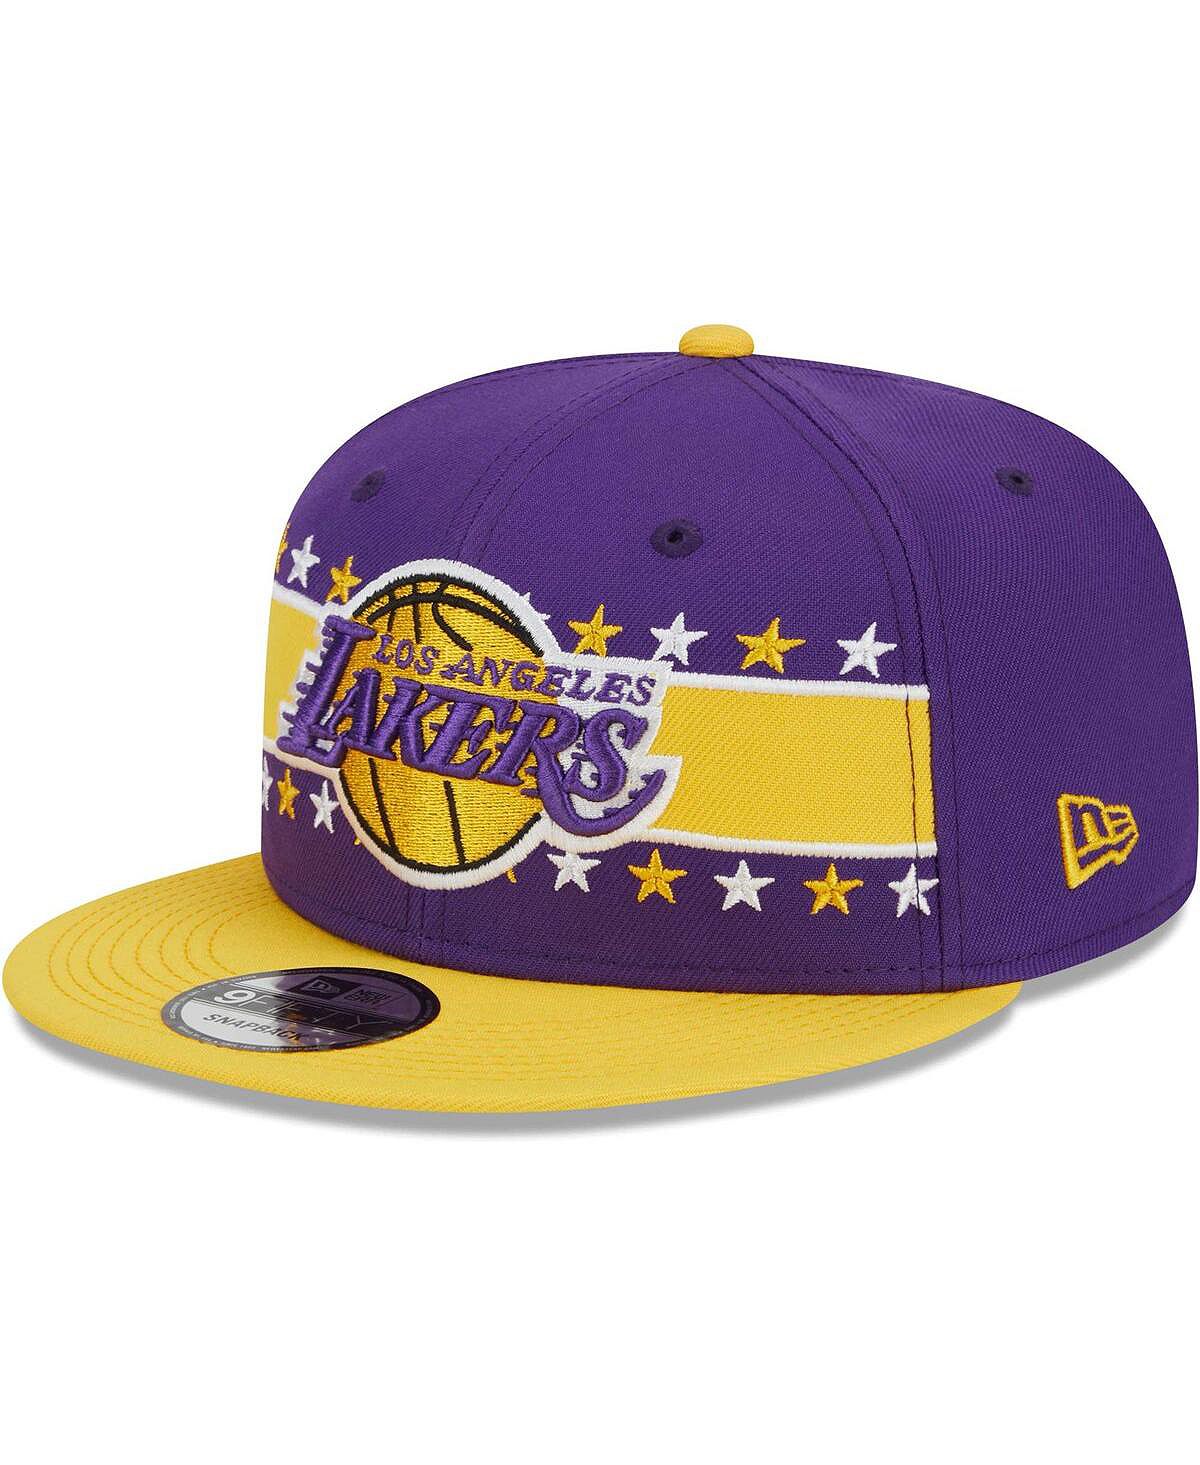 Мужская фиолетовая бейсболка Los Angeles Lakers с полосками звезд 9FIFTY Snapback New Era